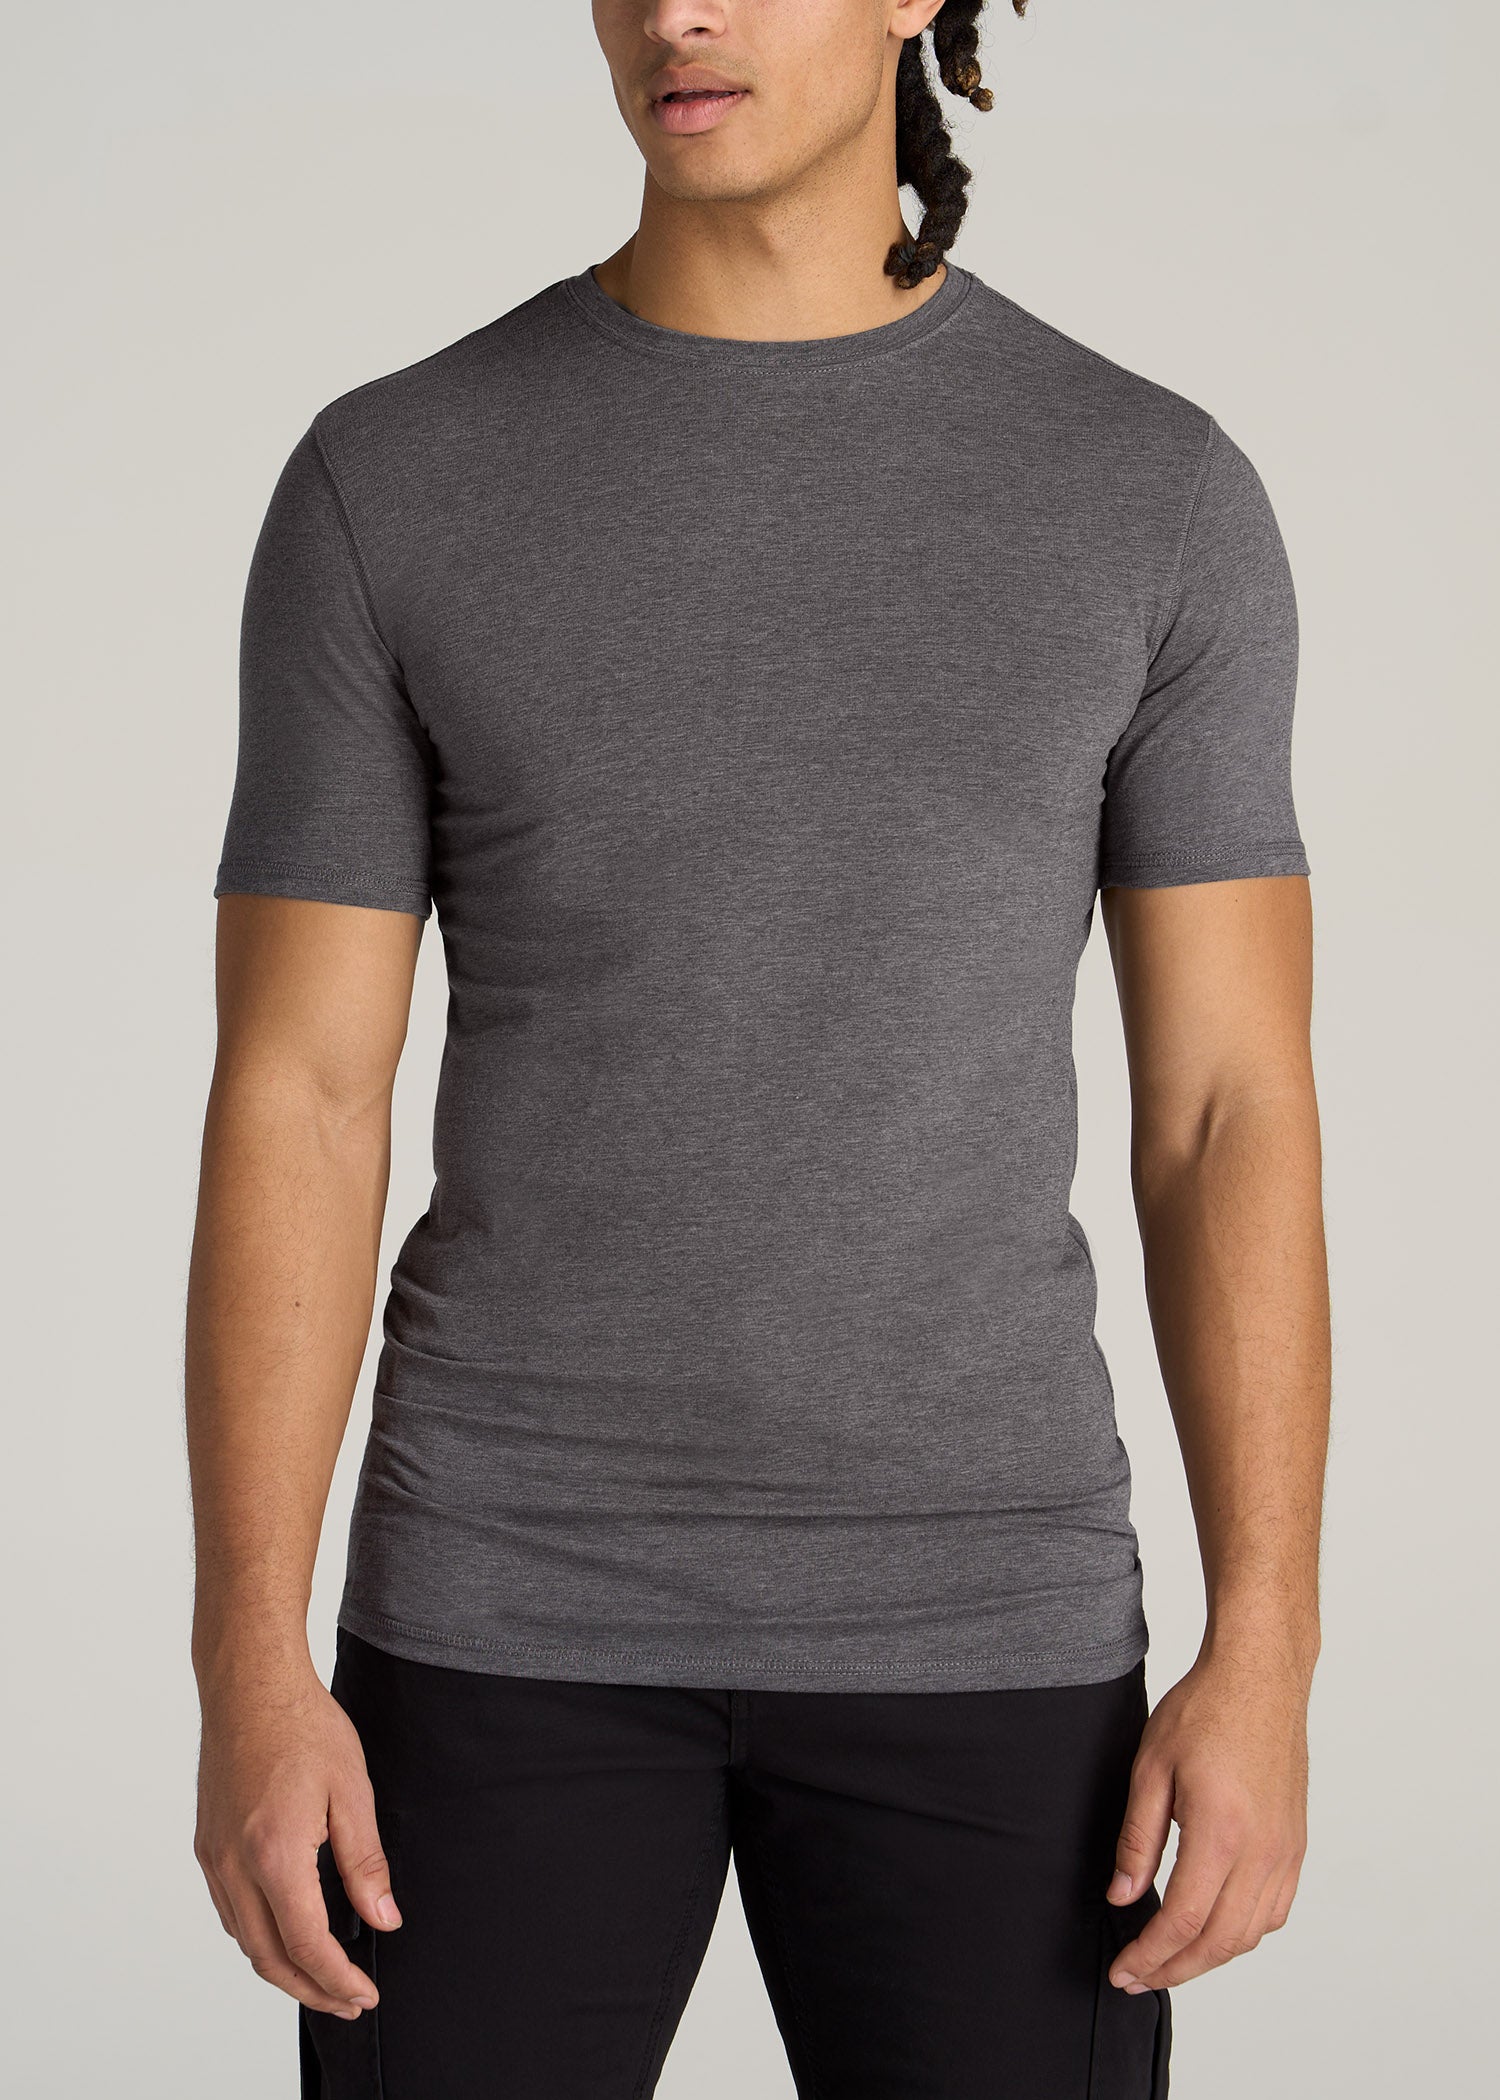 Kix Black Unisex T-Shirt - Tees - Shirts